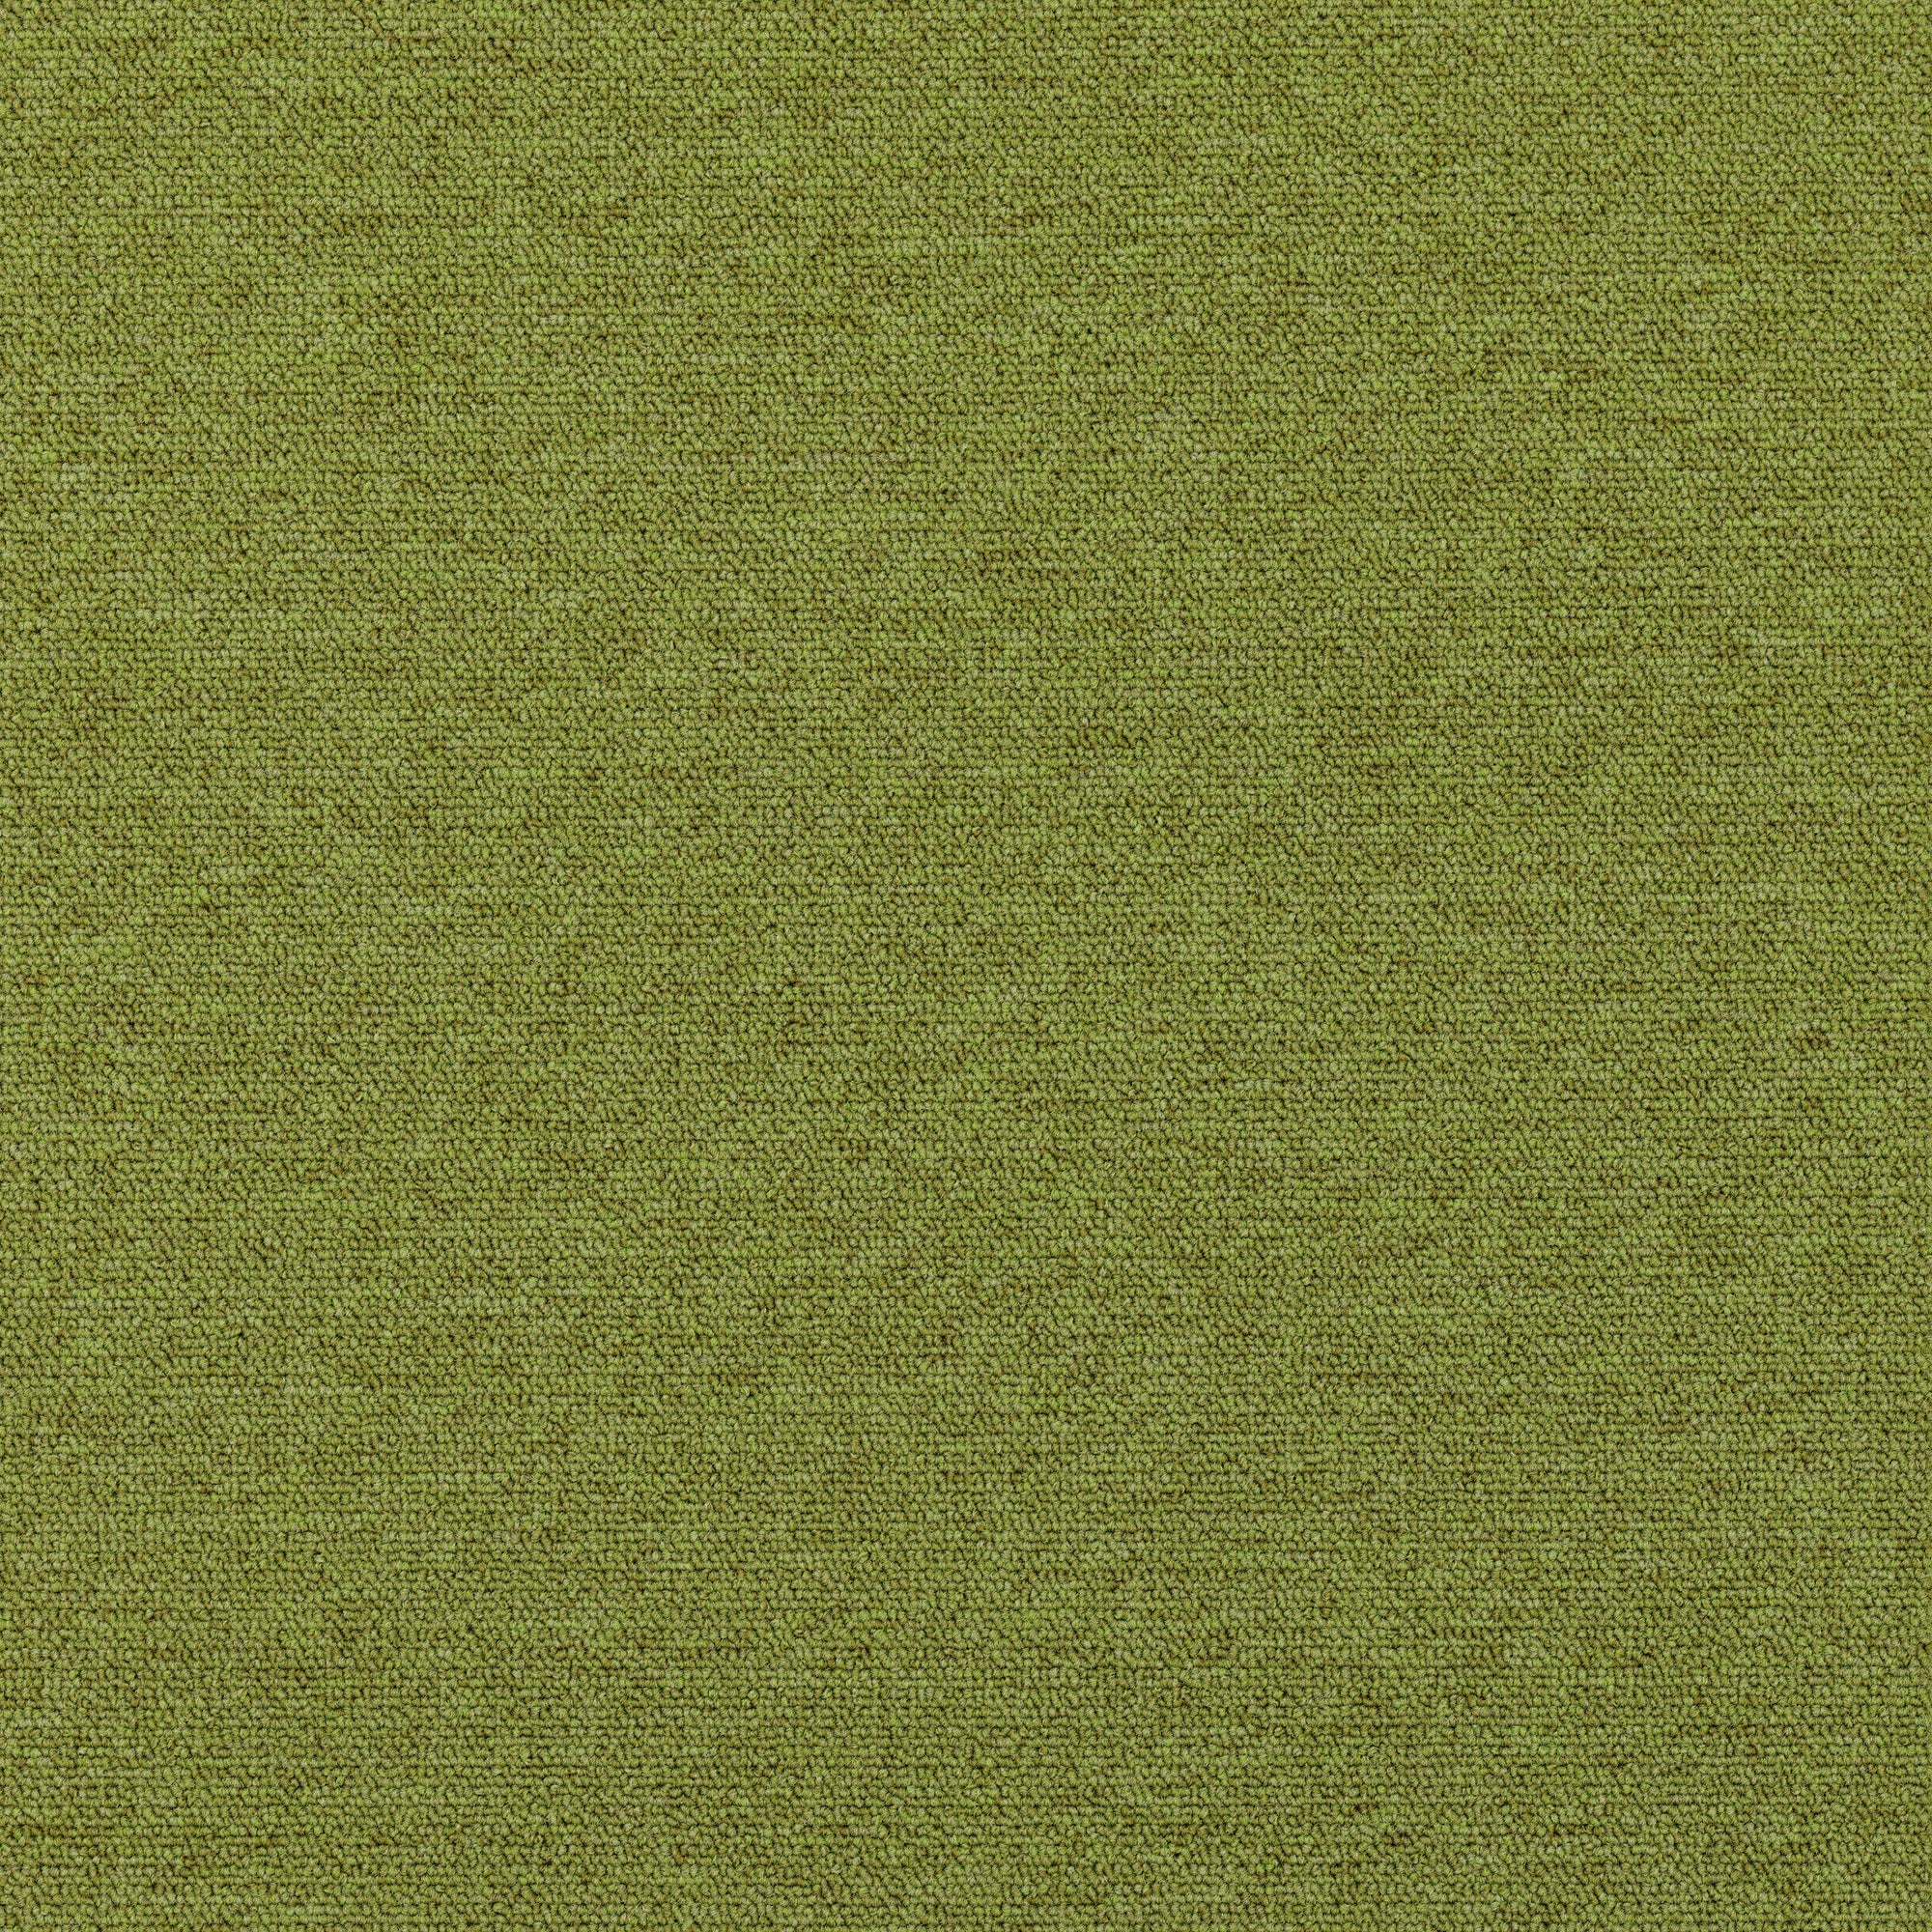 Plusfloor New Viilea Leaf Green carpet tiles for offices 100% Nylon